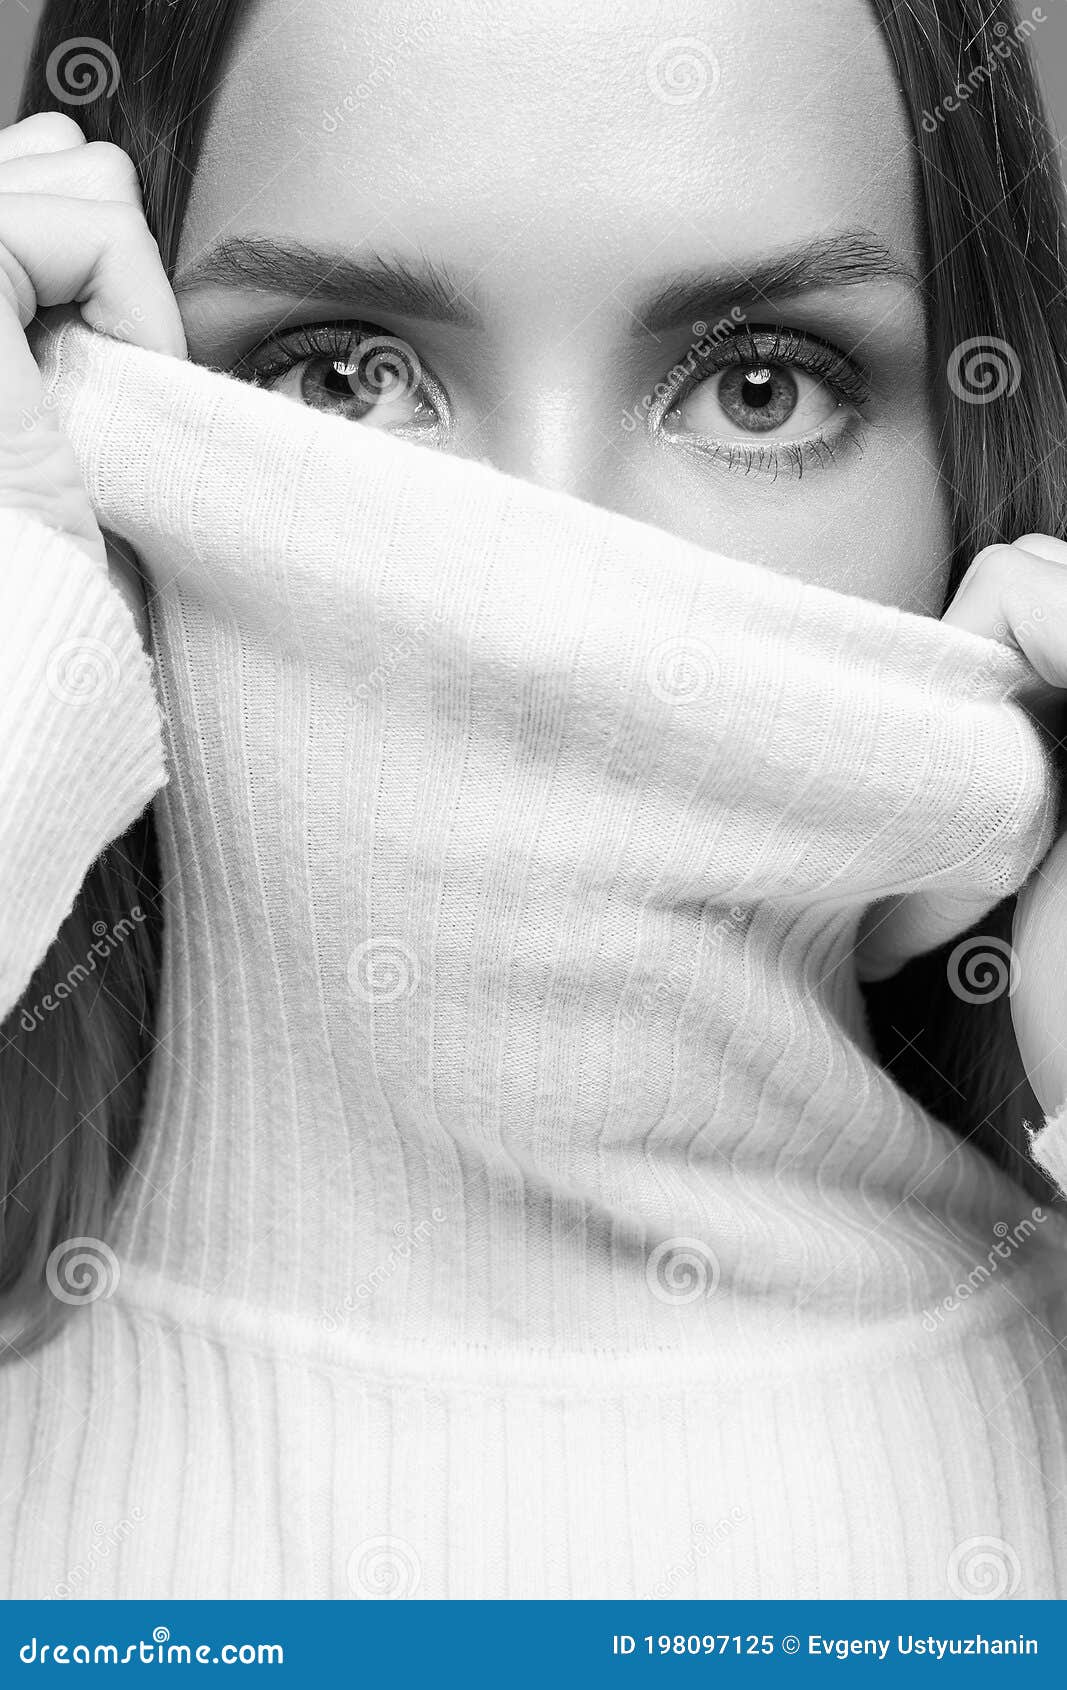 Beautiful Eyes of Girl in White Turtleneck Stock Image - Image of ...